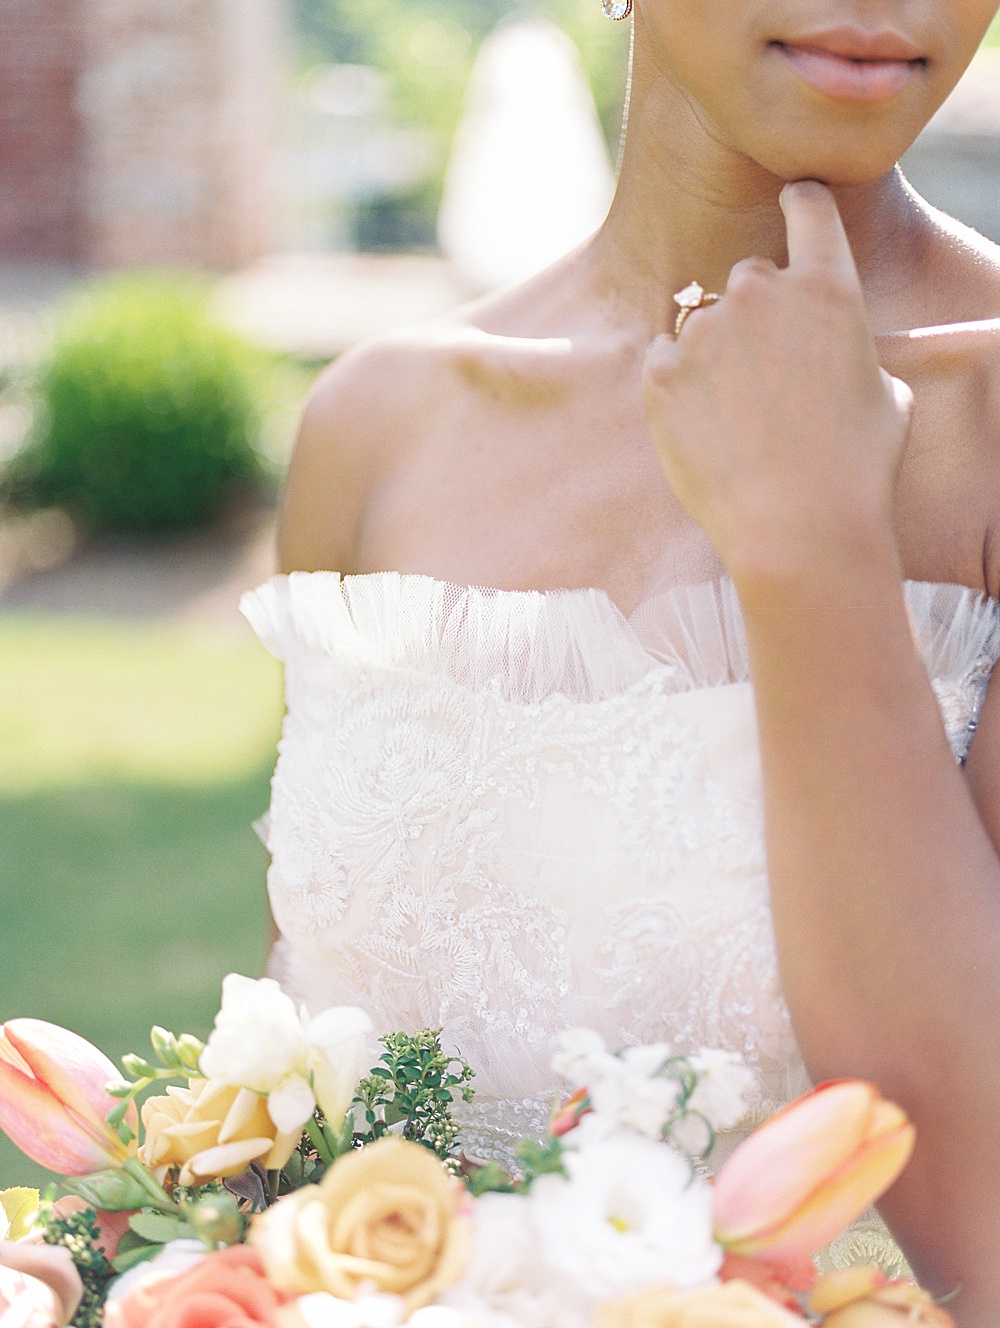 Fringe on the neckline of a wedding dress